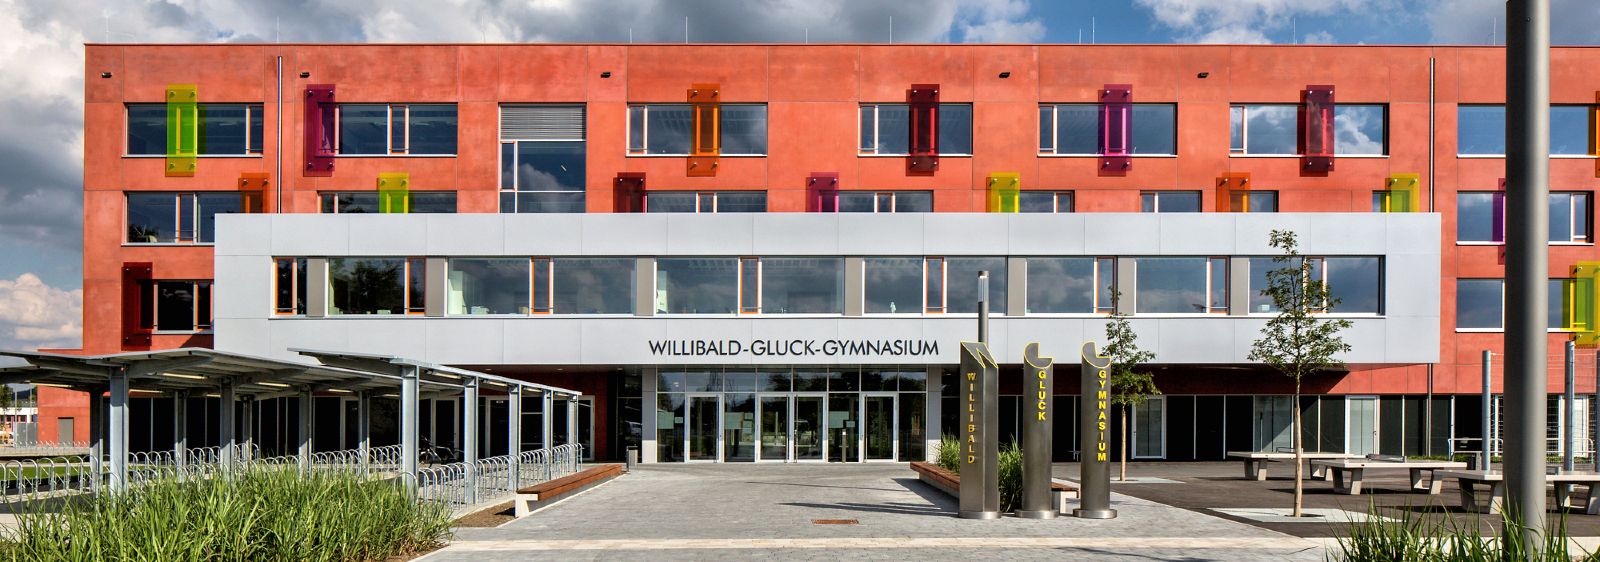 Entrance area Willibald-Gluck-Gymnasium